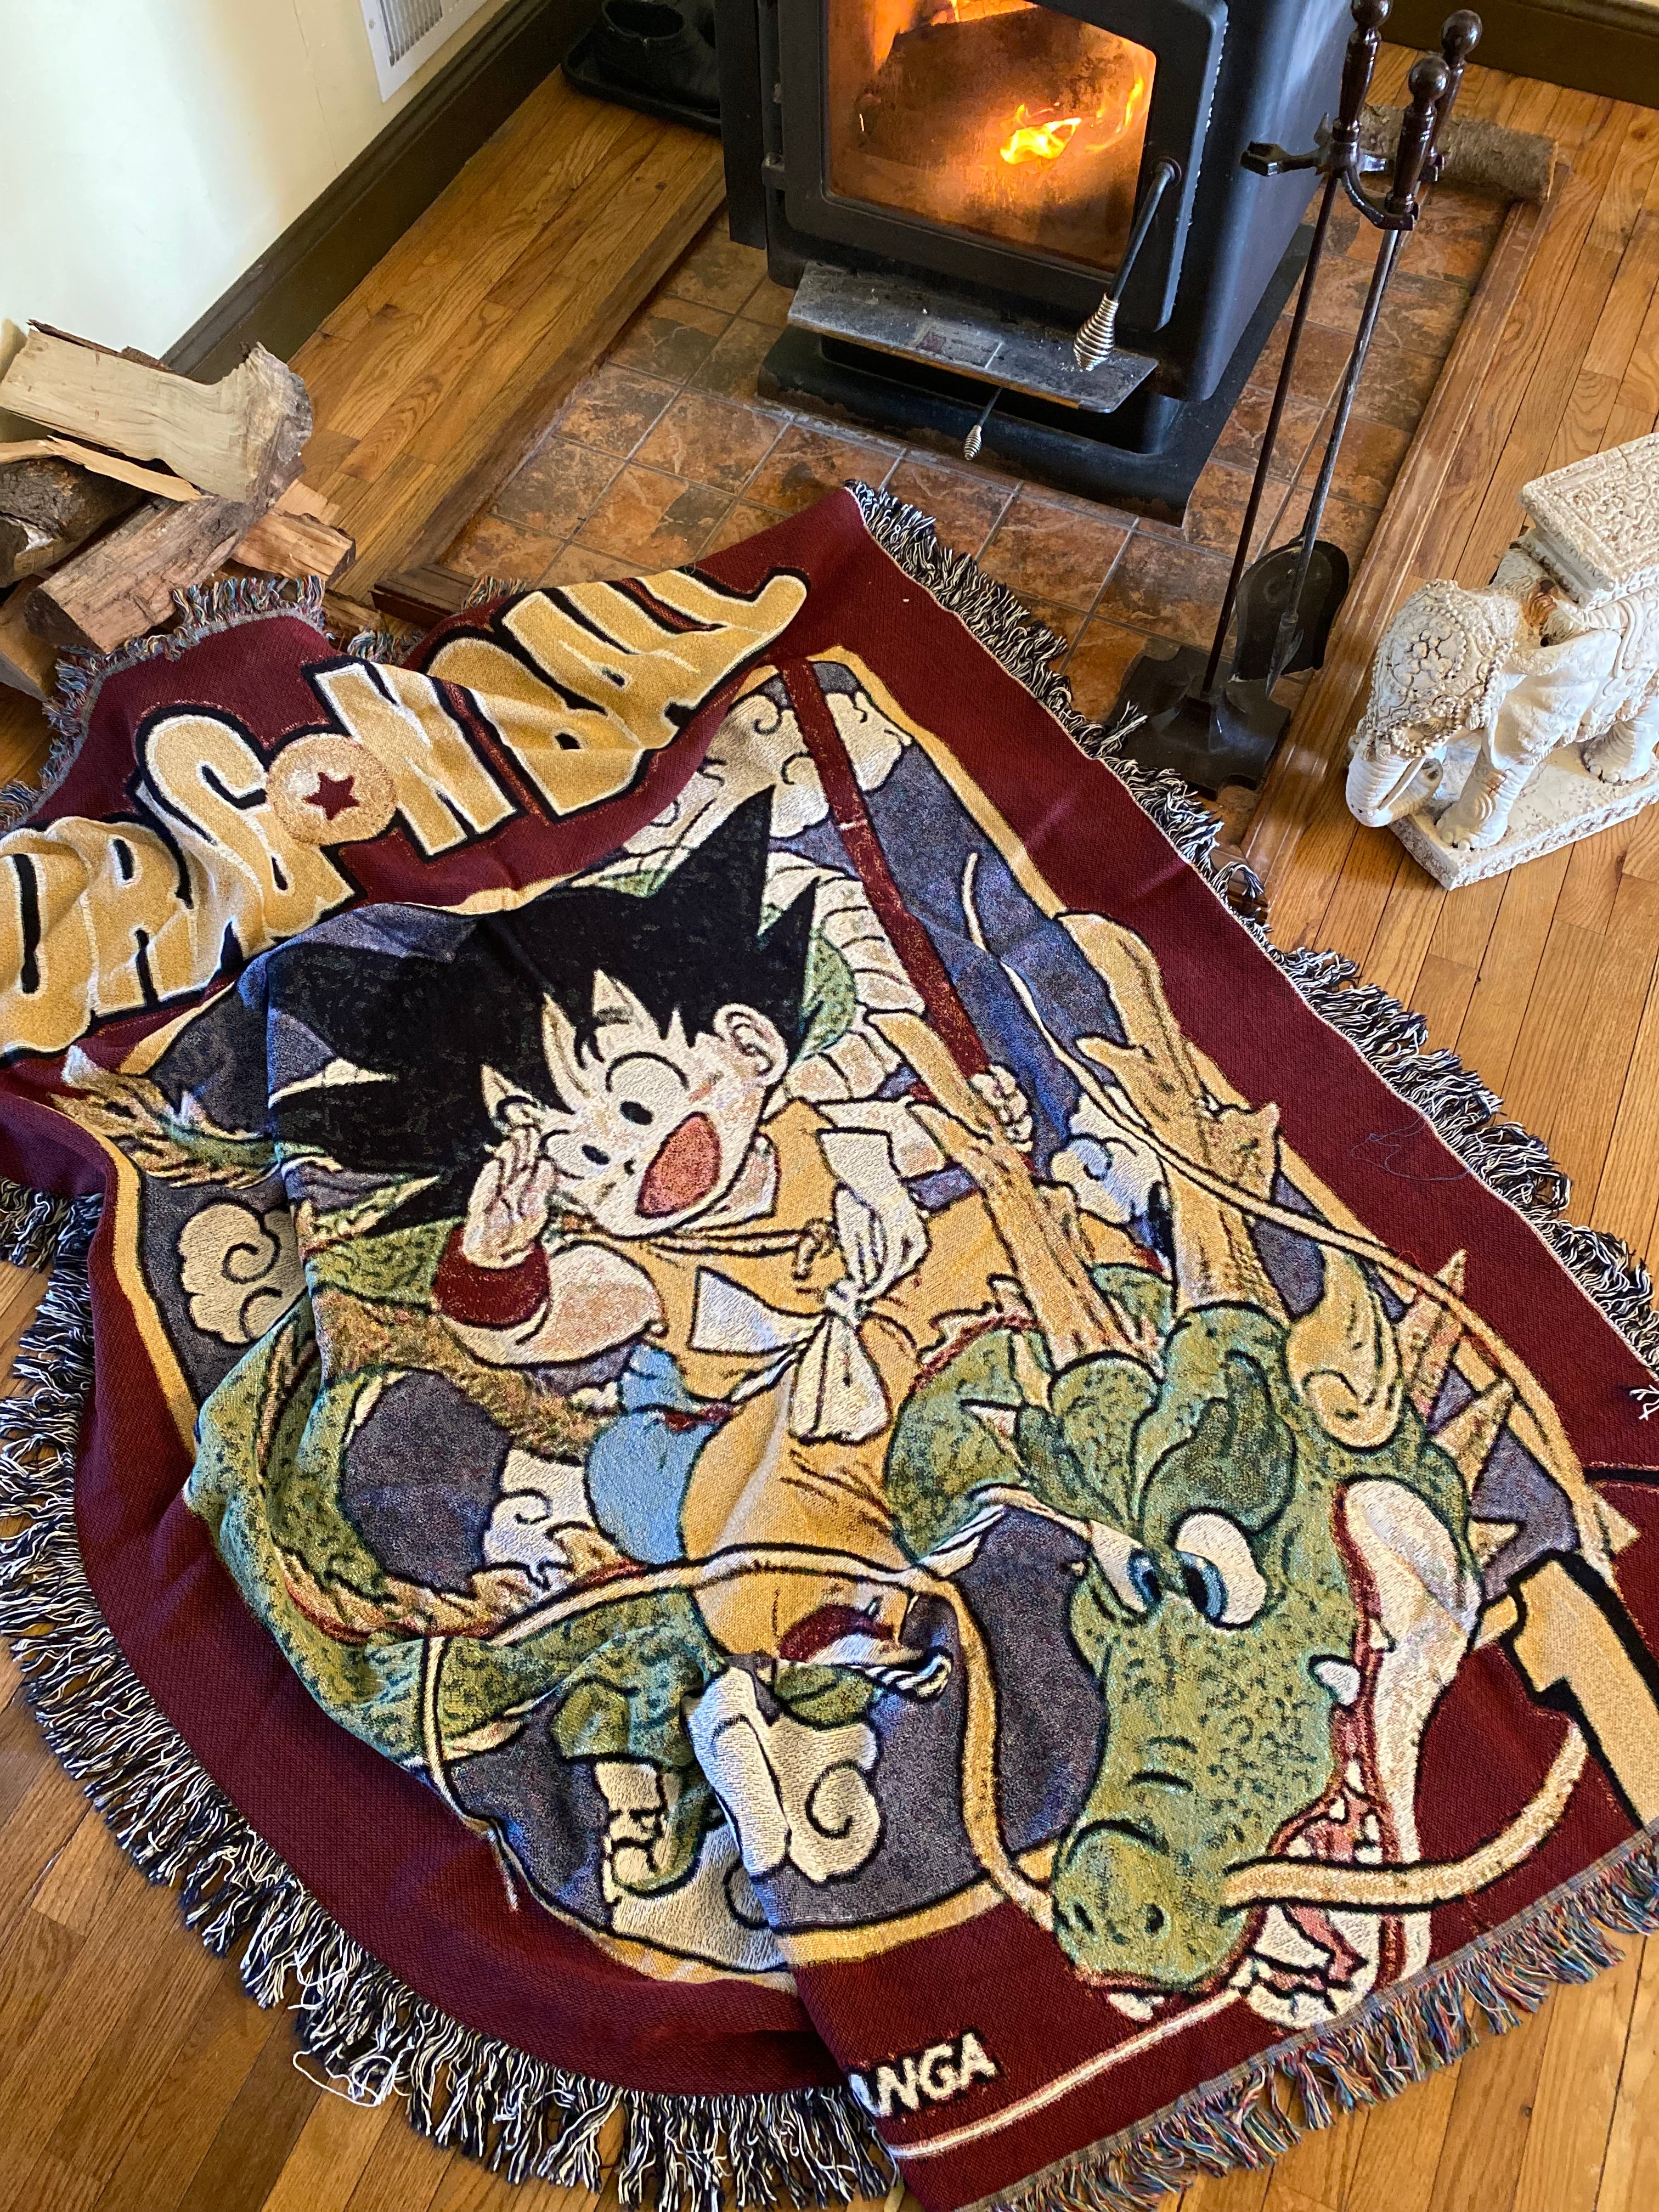 Dragon Ball Vol. 1 Tapestry Throw Blanket (6.7 feet x 5 feet)